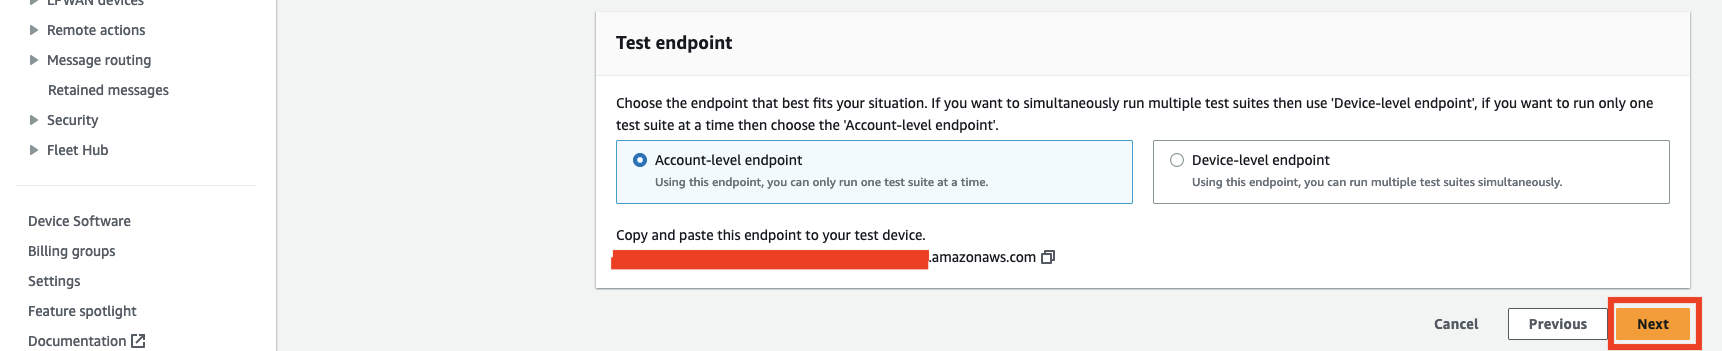 Pilihan untuk memilih Account-level atau Device-level endpoint untuk pengujian, dengan URL endpoint yang disediakan dan tombol Next.